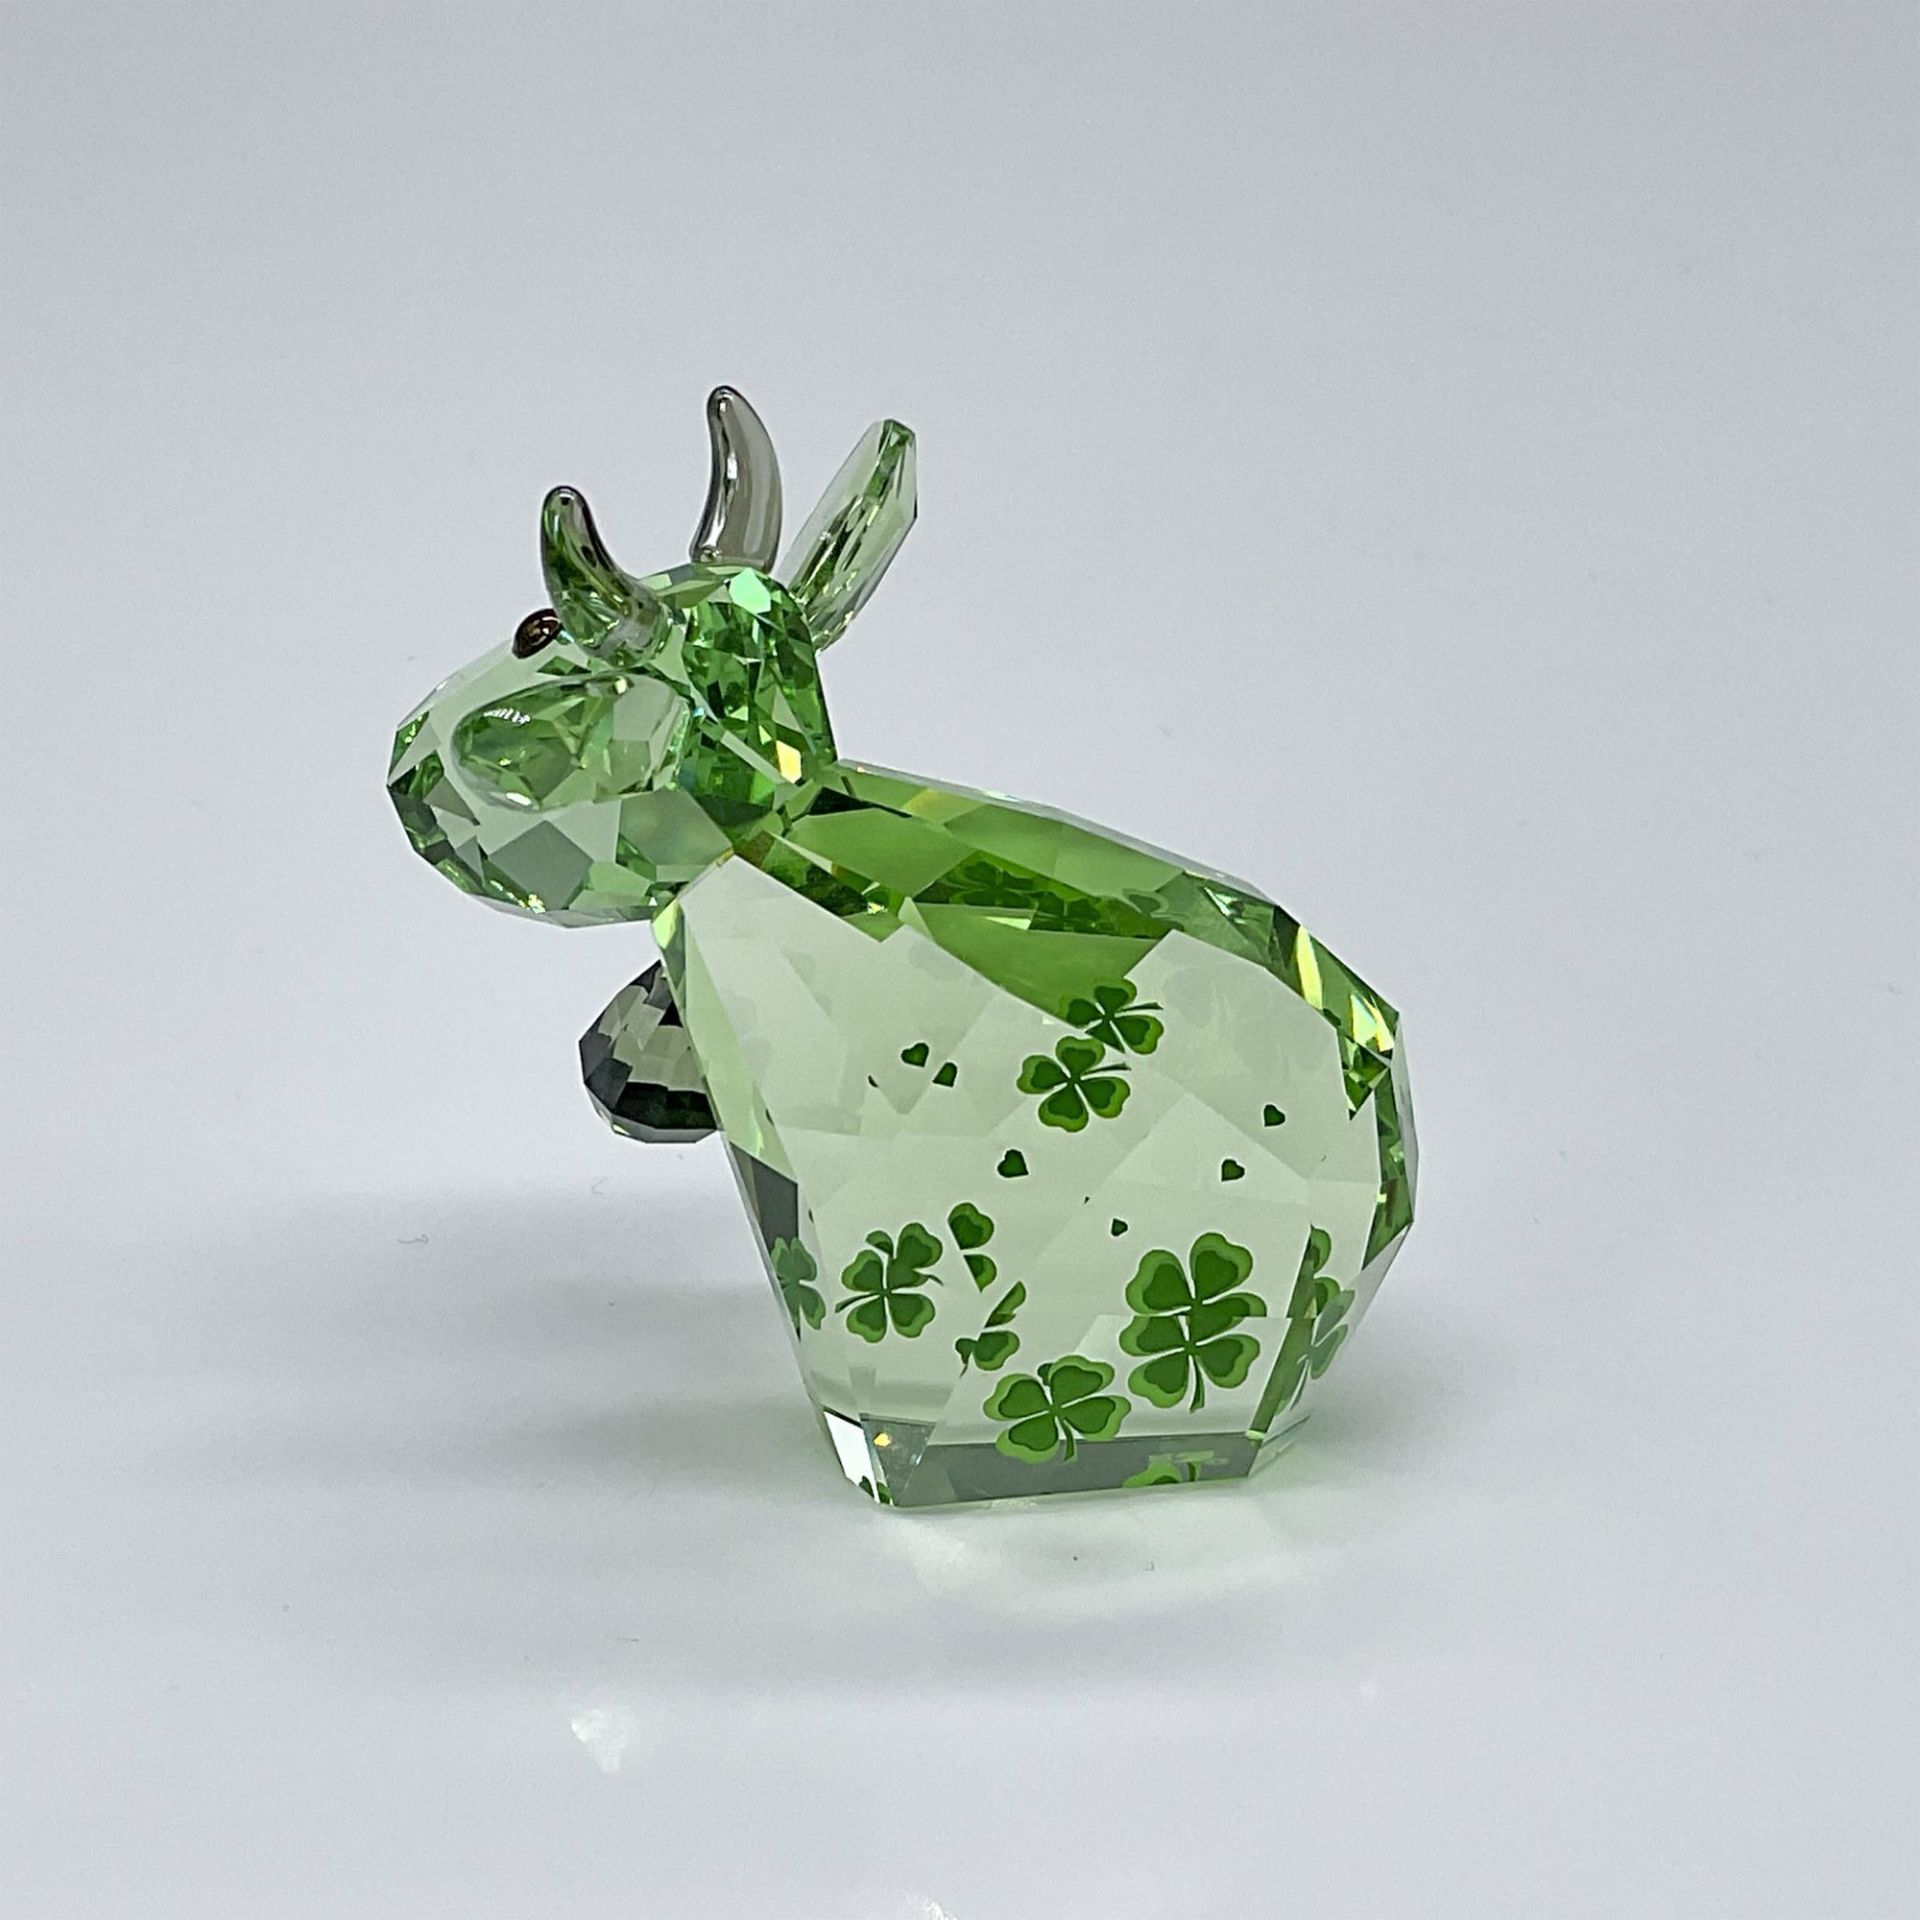 Swarovski Crystal Lovlots Figurine, Green Flower Mo - Image 2 of 3